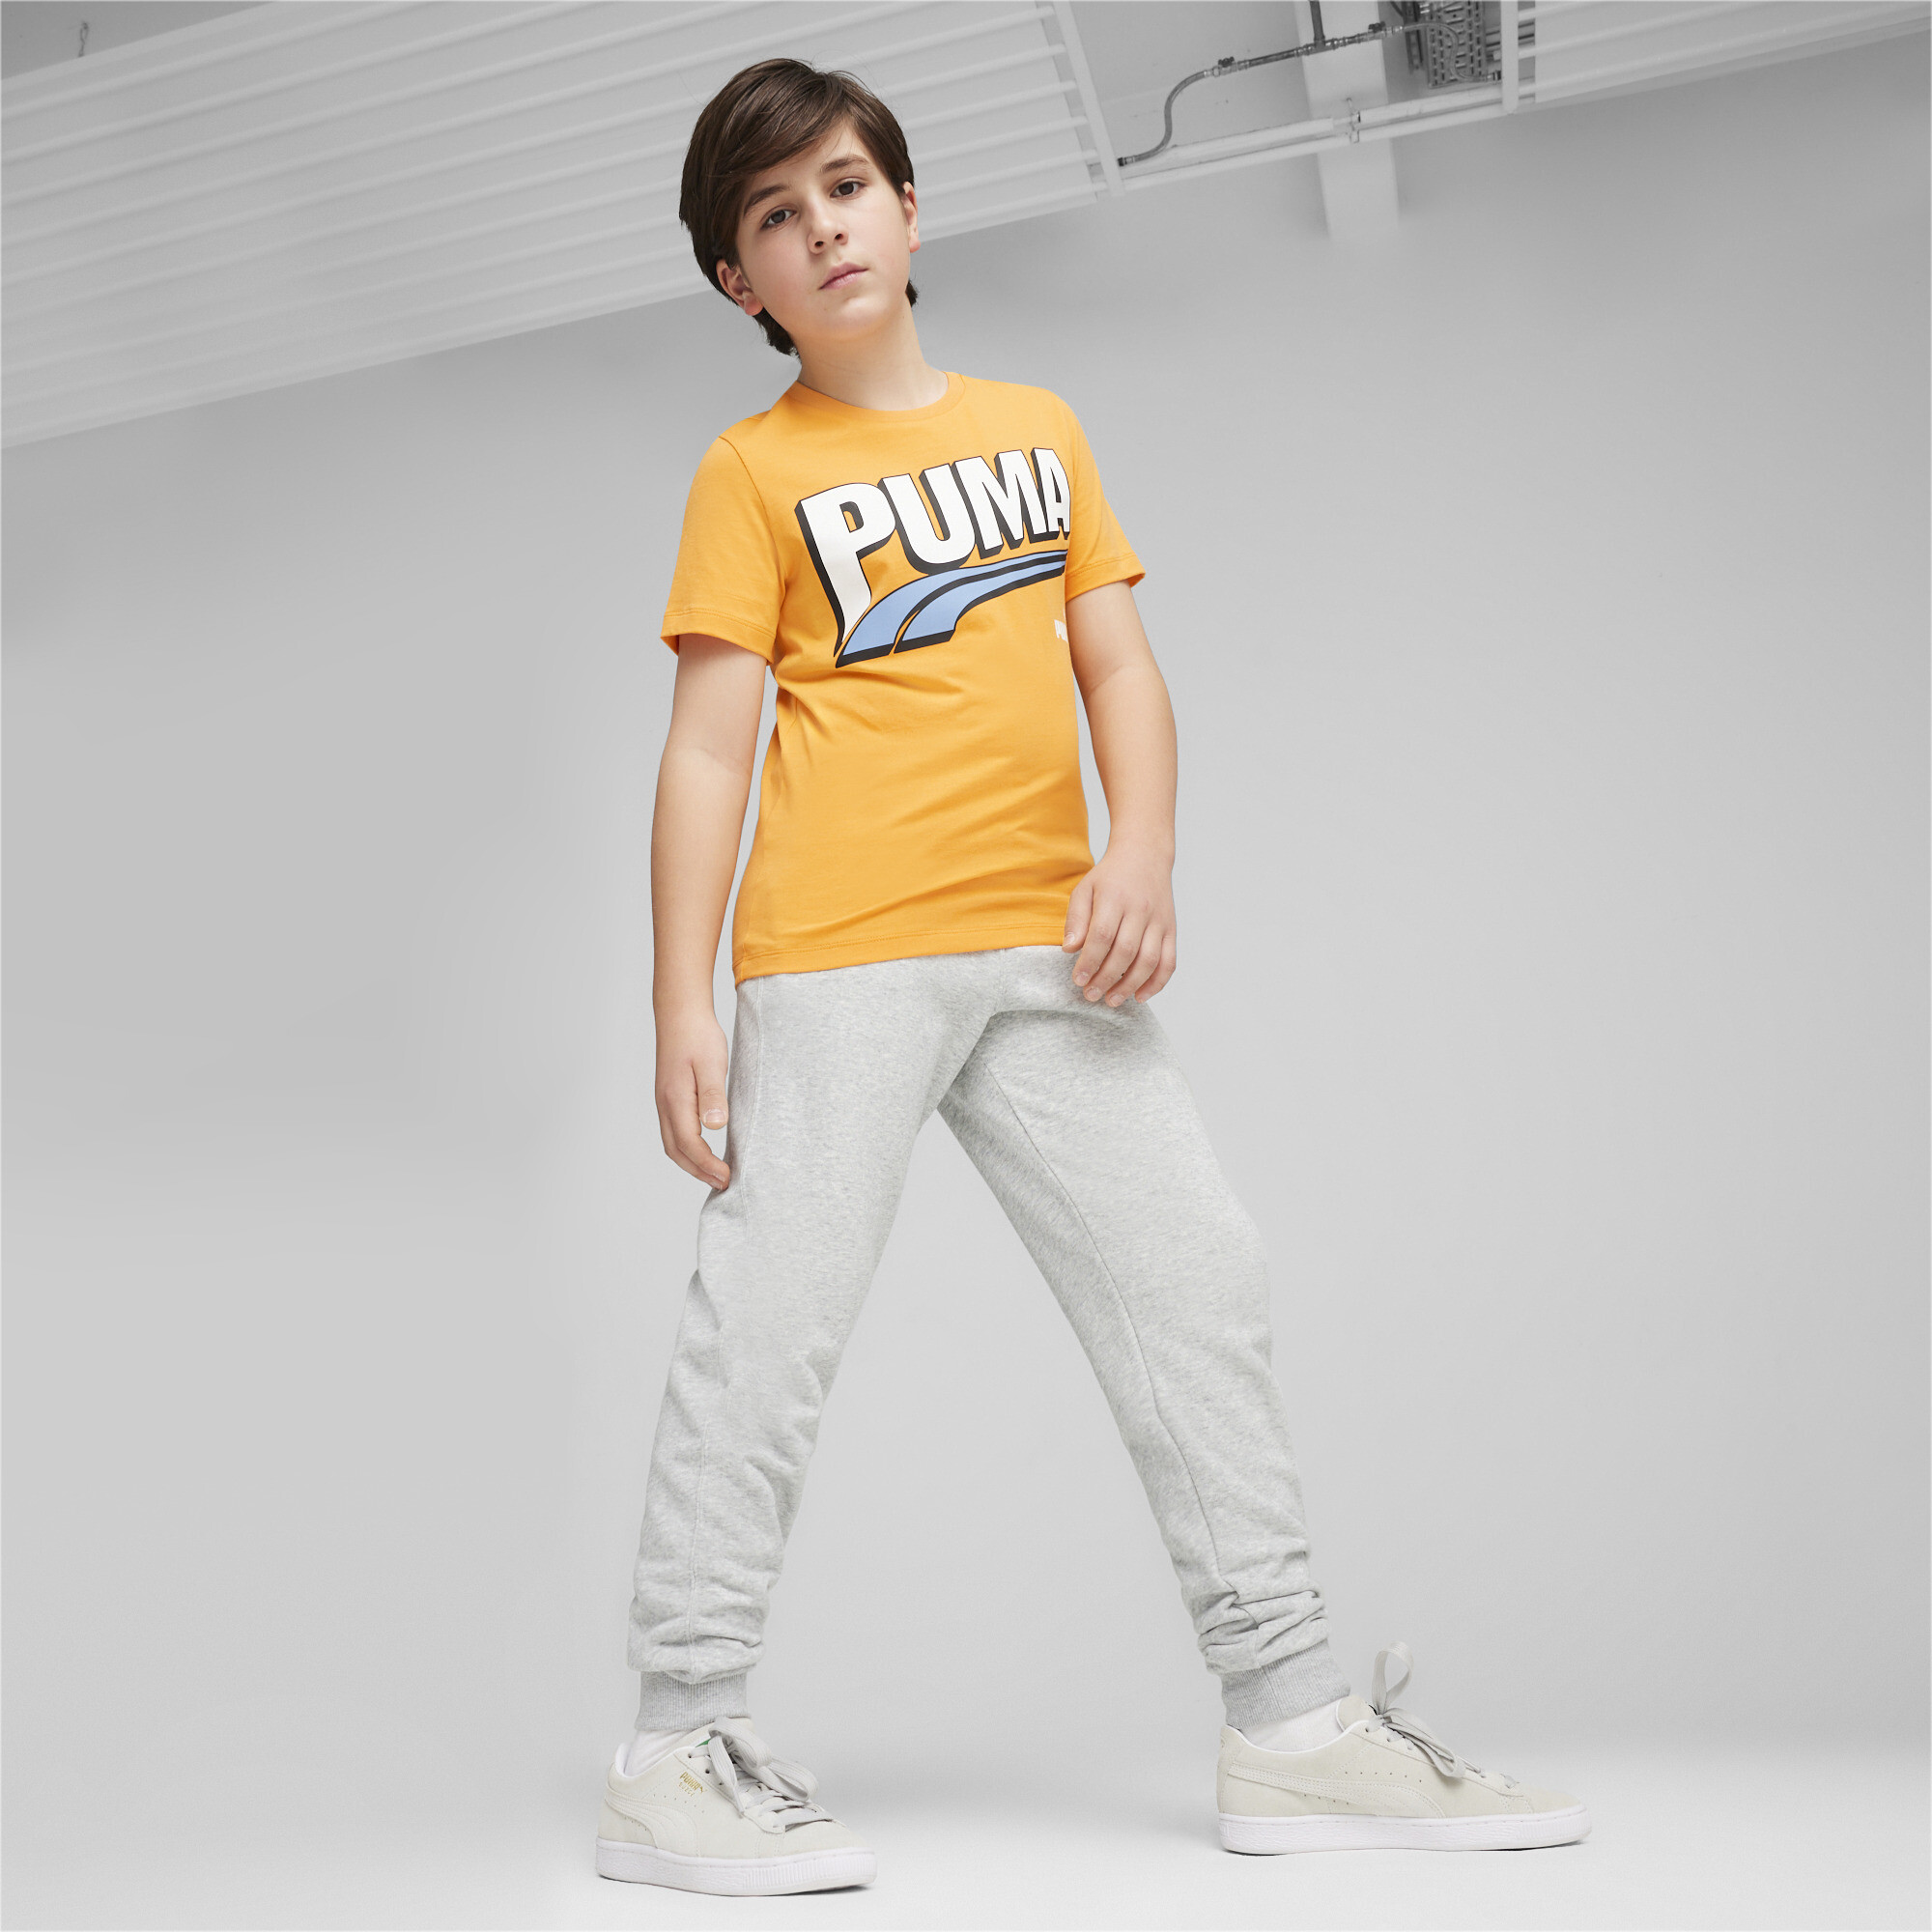 Men's Puma SQUAD Youth Sweatpants, Gray, Size 11-12Y, Age